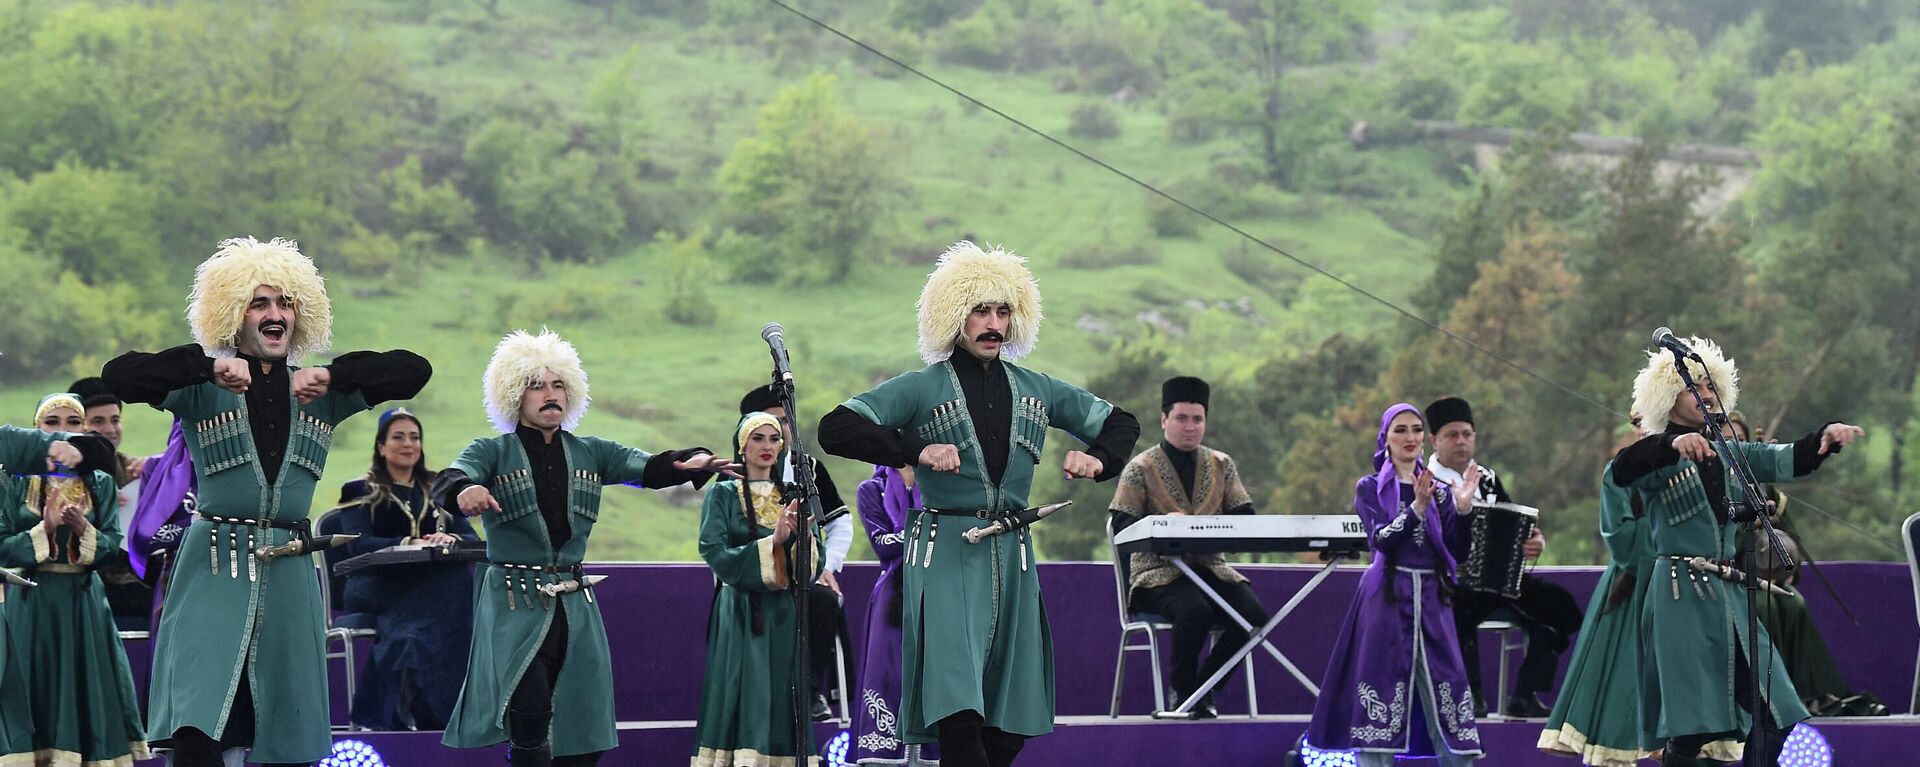 Фестиваль Хары бюльбюль в Шуше - Sputnik Азербайджан, 1920, 13.05.2022